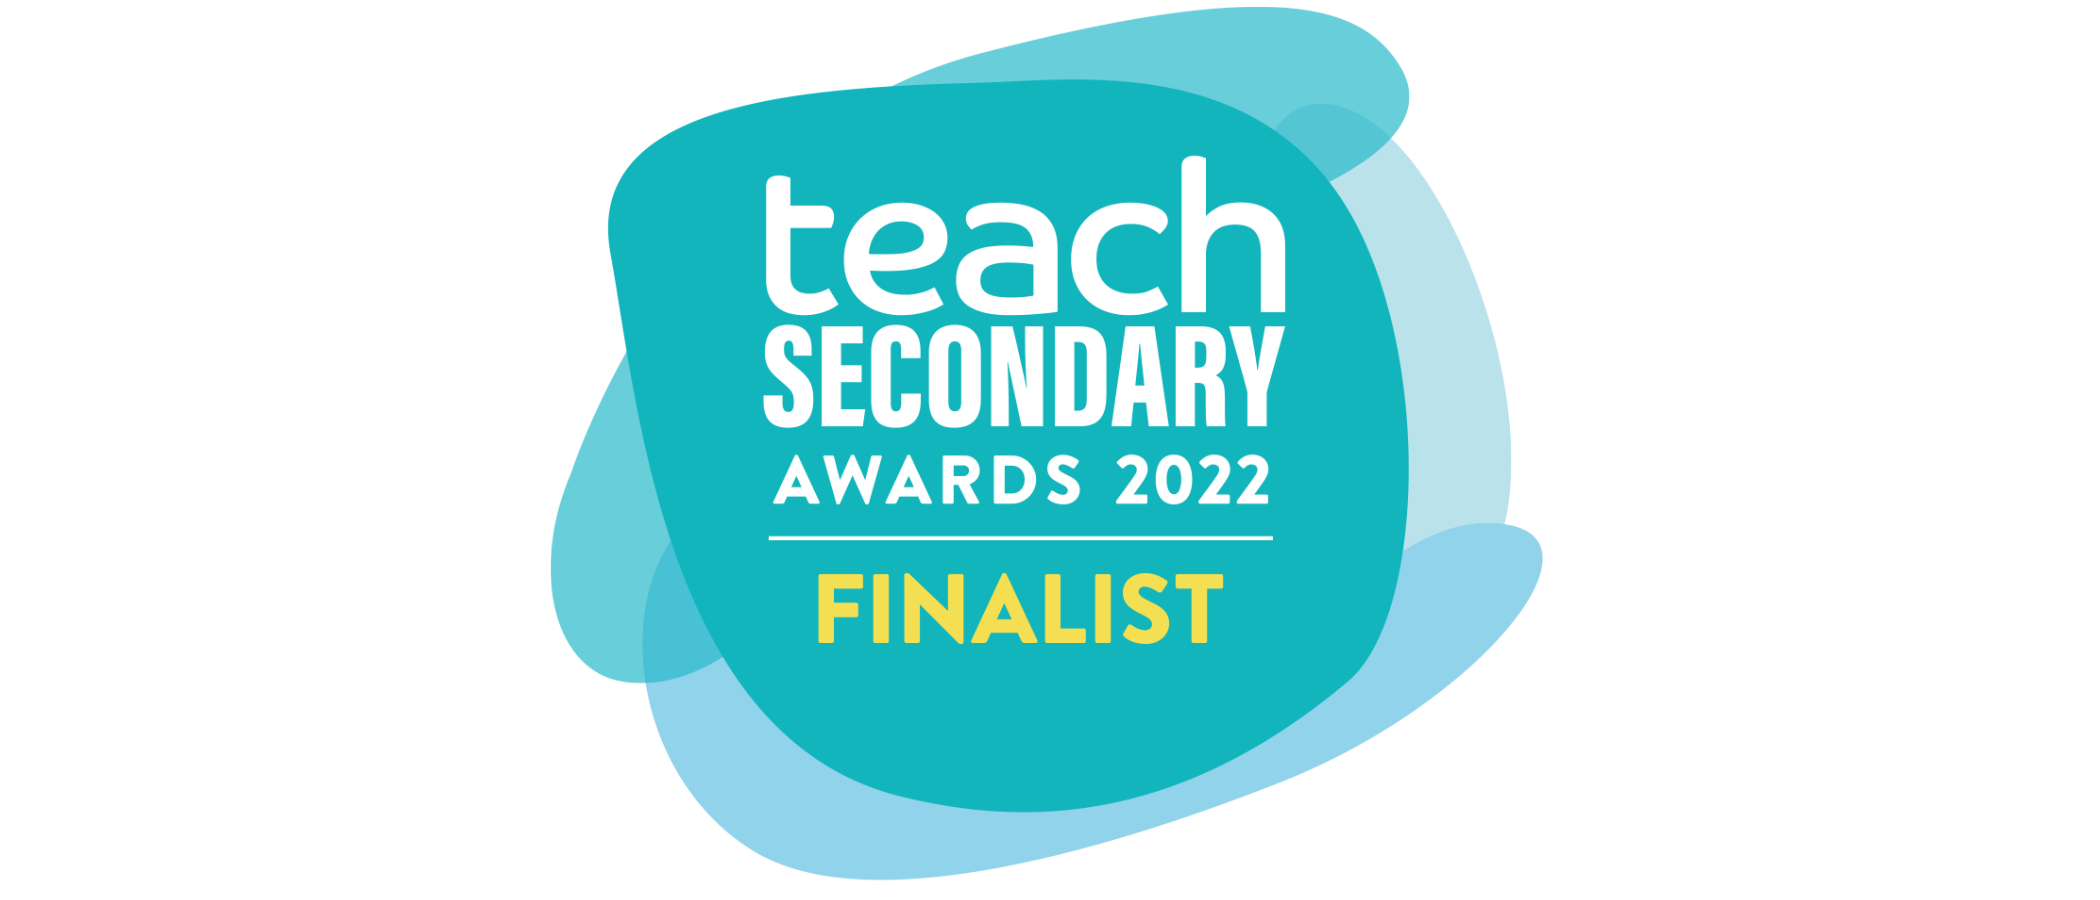 Finalist badge for Teach Secondary Awards